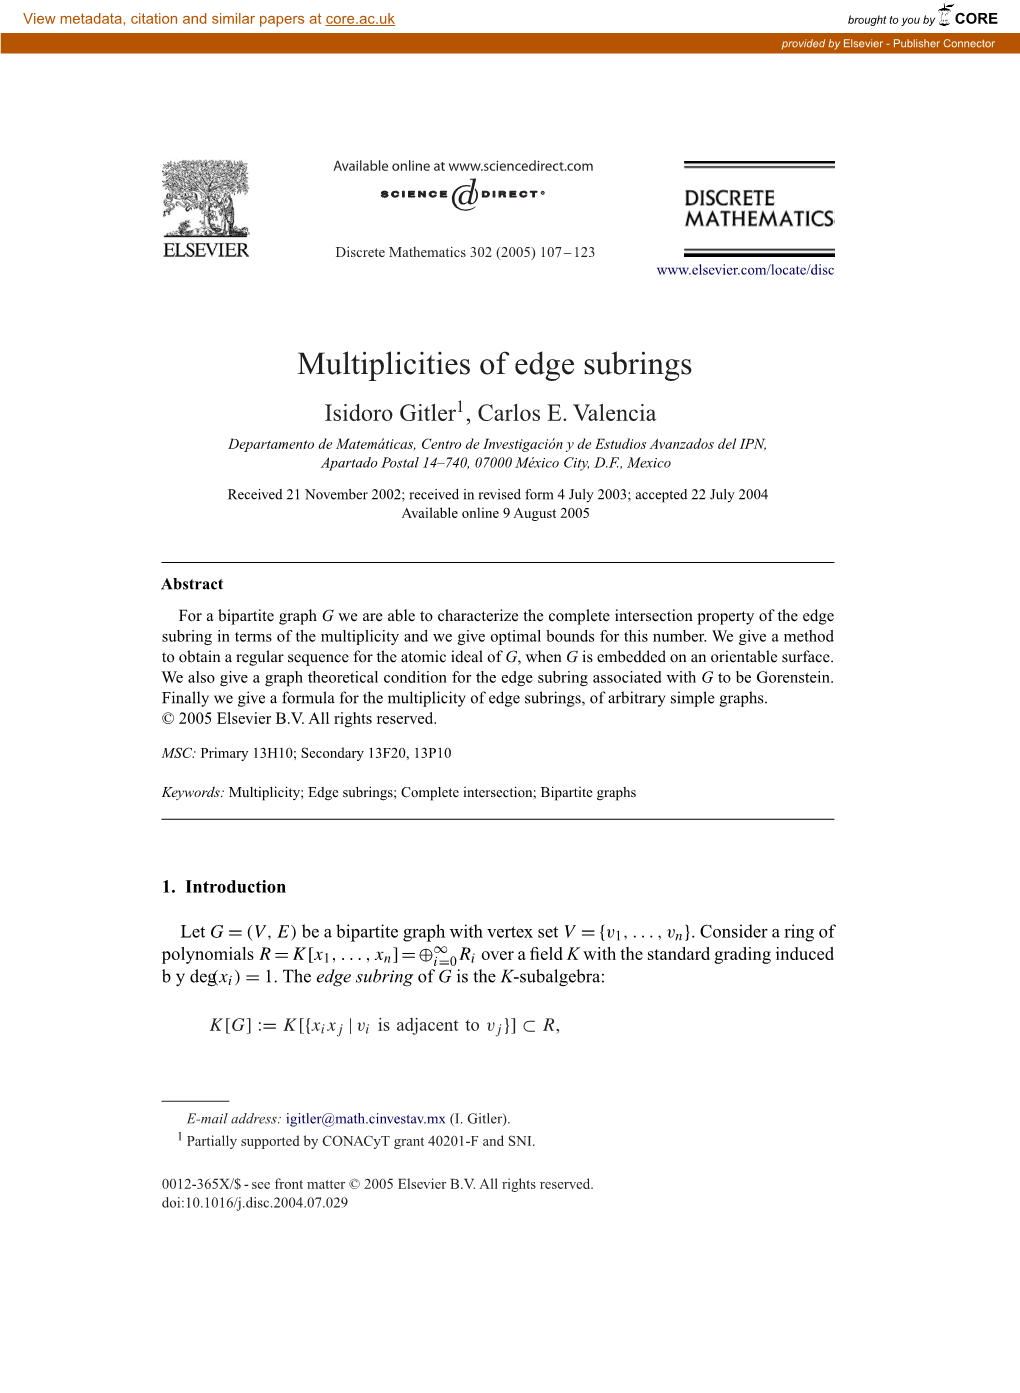 Multiplicities of Edge Subrings Isidoro Gitler1, Carlos E